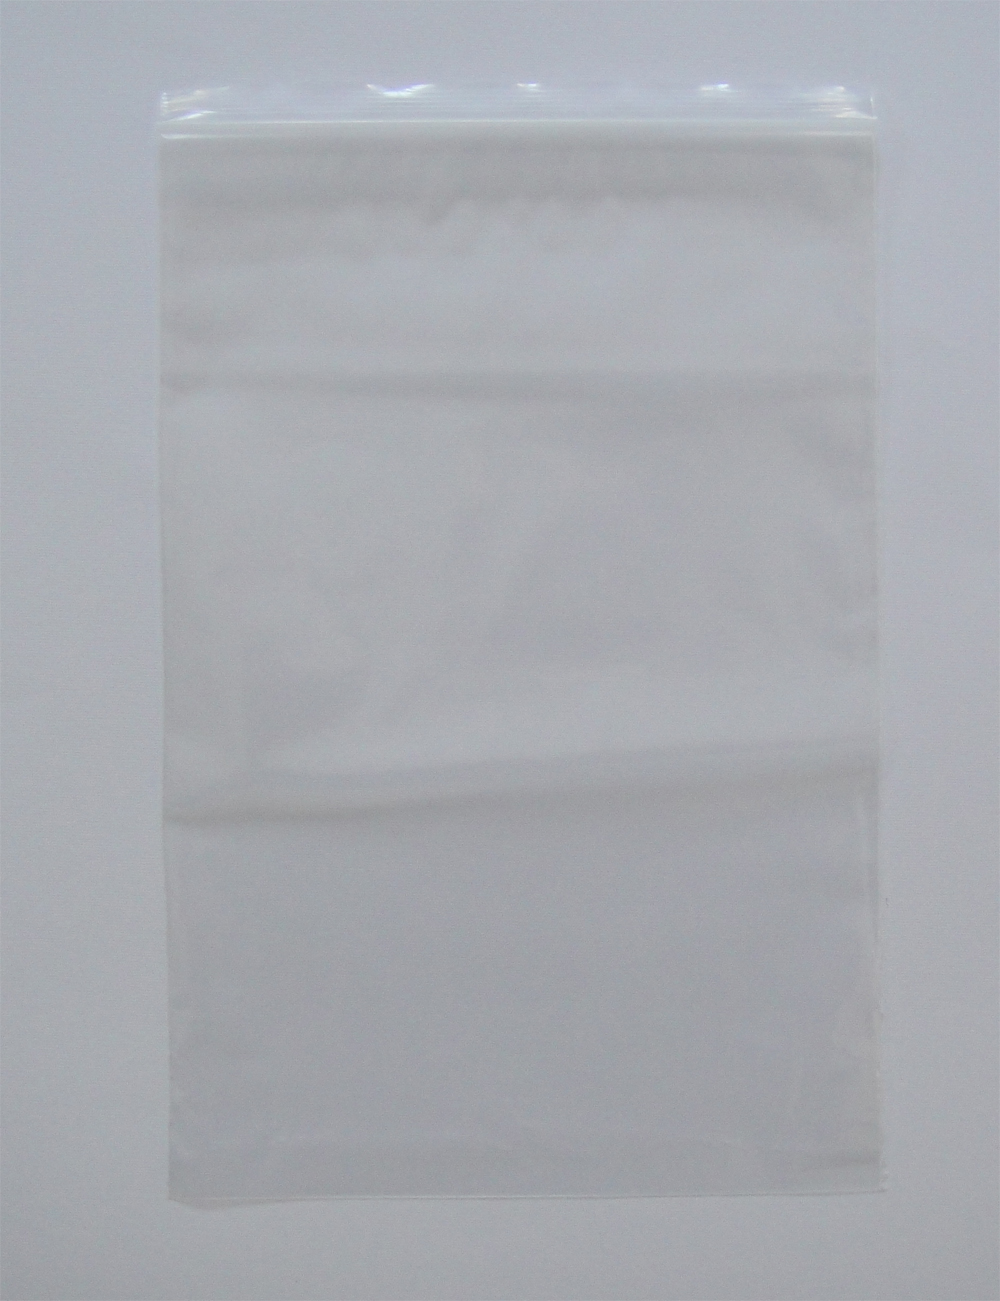 10000 x Grip Seal Resealable Poly Bags 6" x 9" GL11 